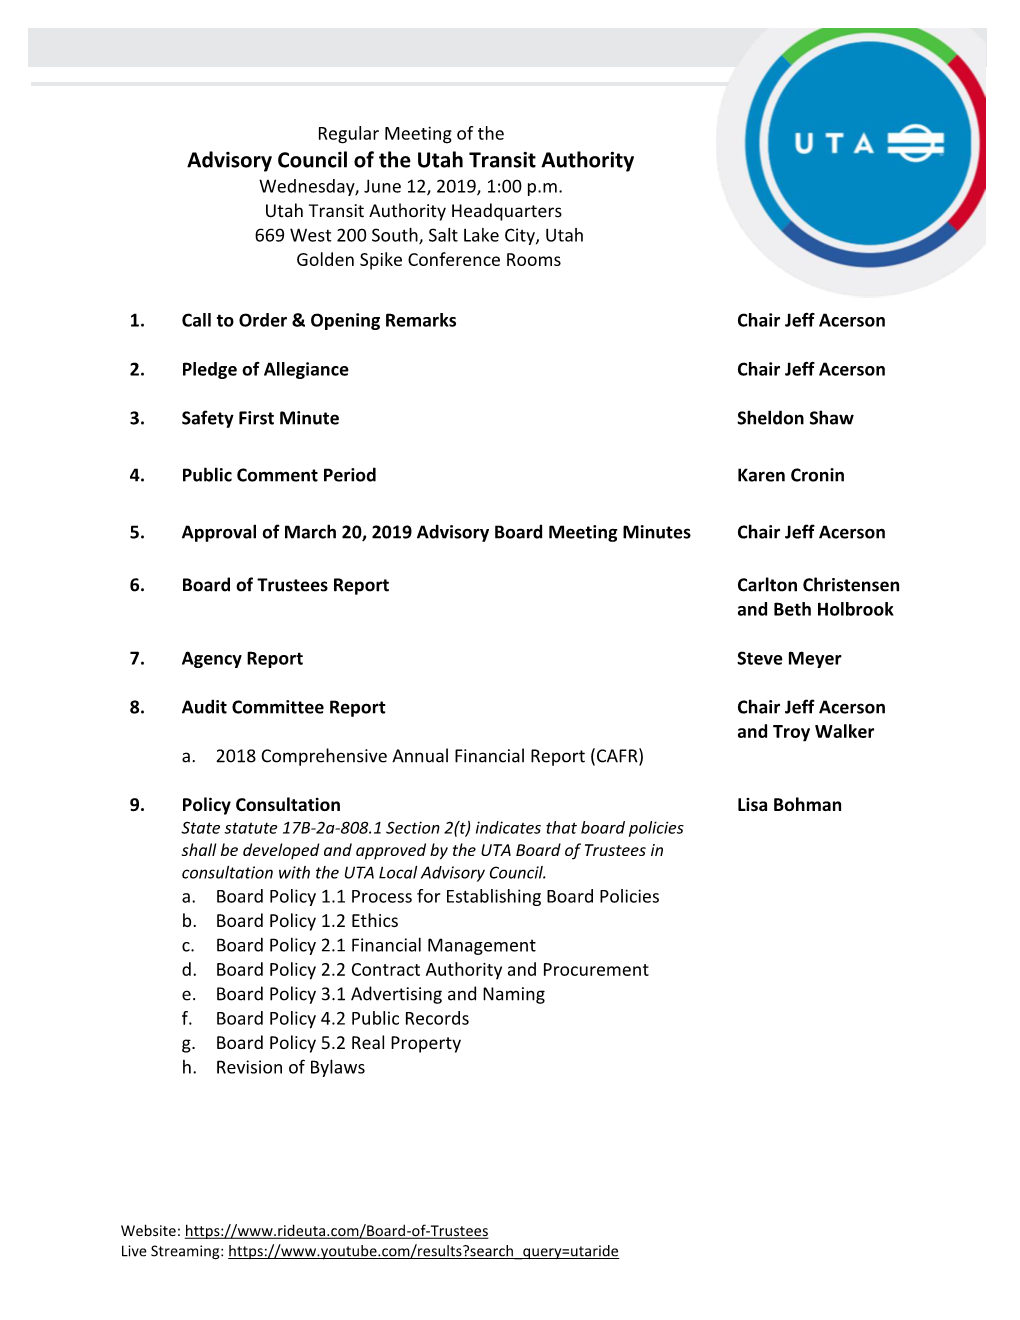 Advisory Council of the Utah Transit Authority Wednesday, June 12, 2019, 1:00 P.M